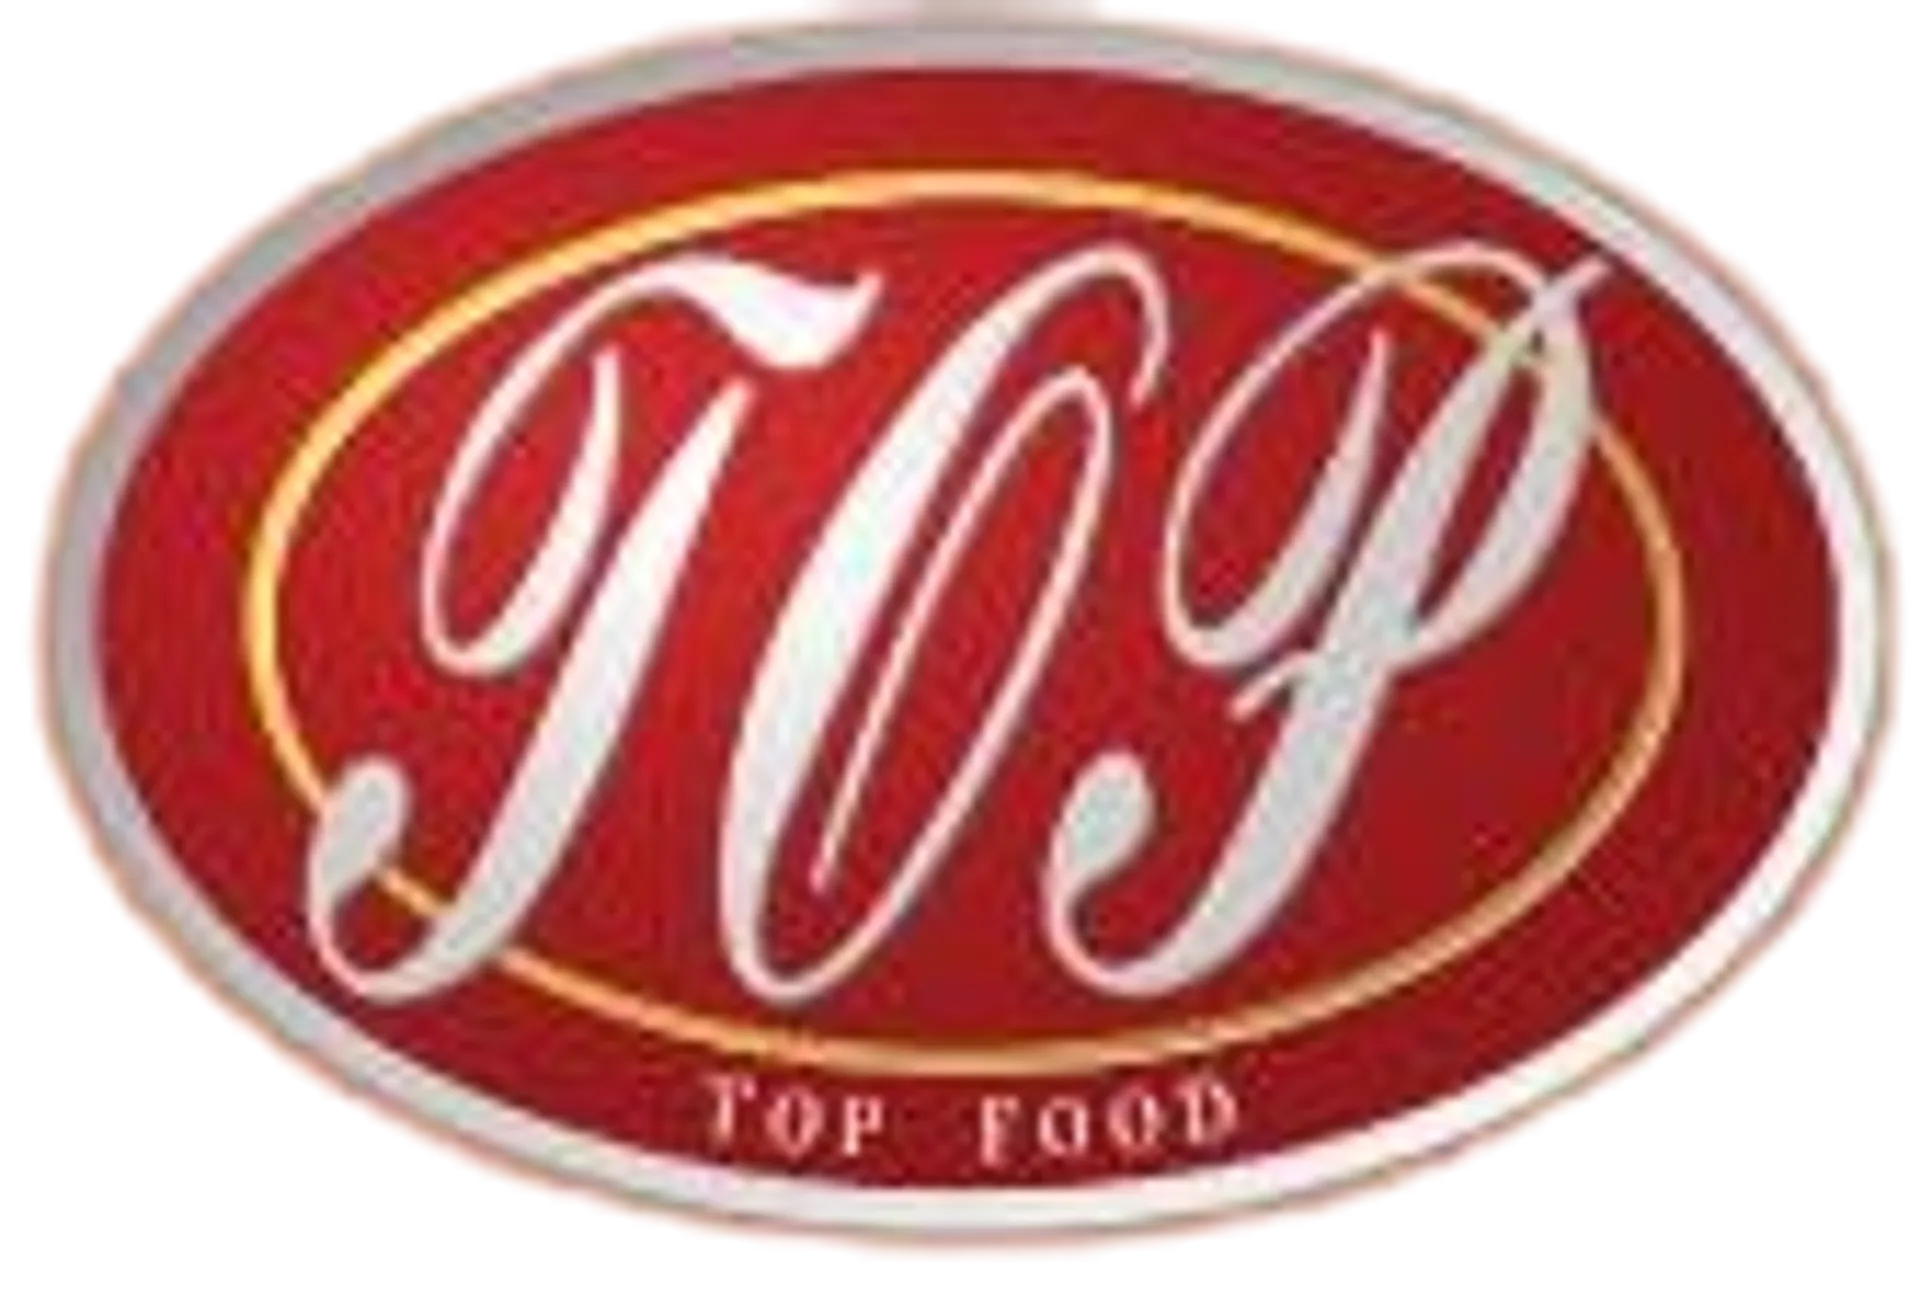 TOP FOOD SUPERMARKET logo. Current weekly ad